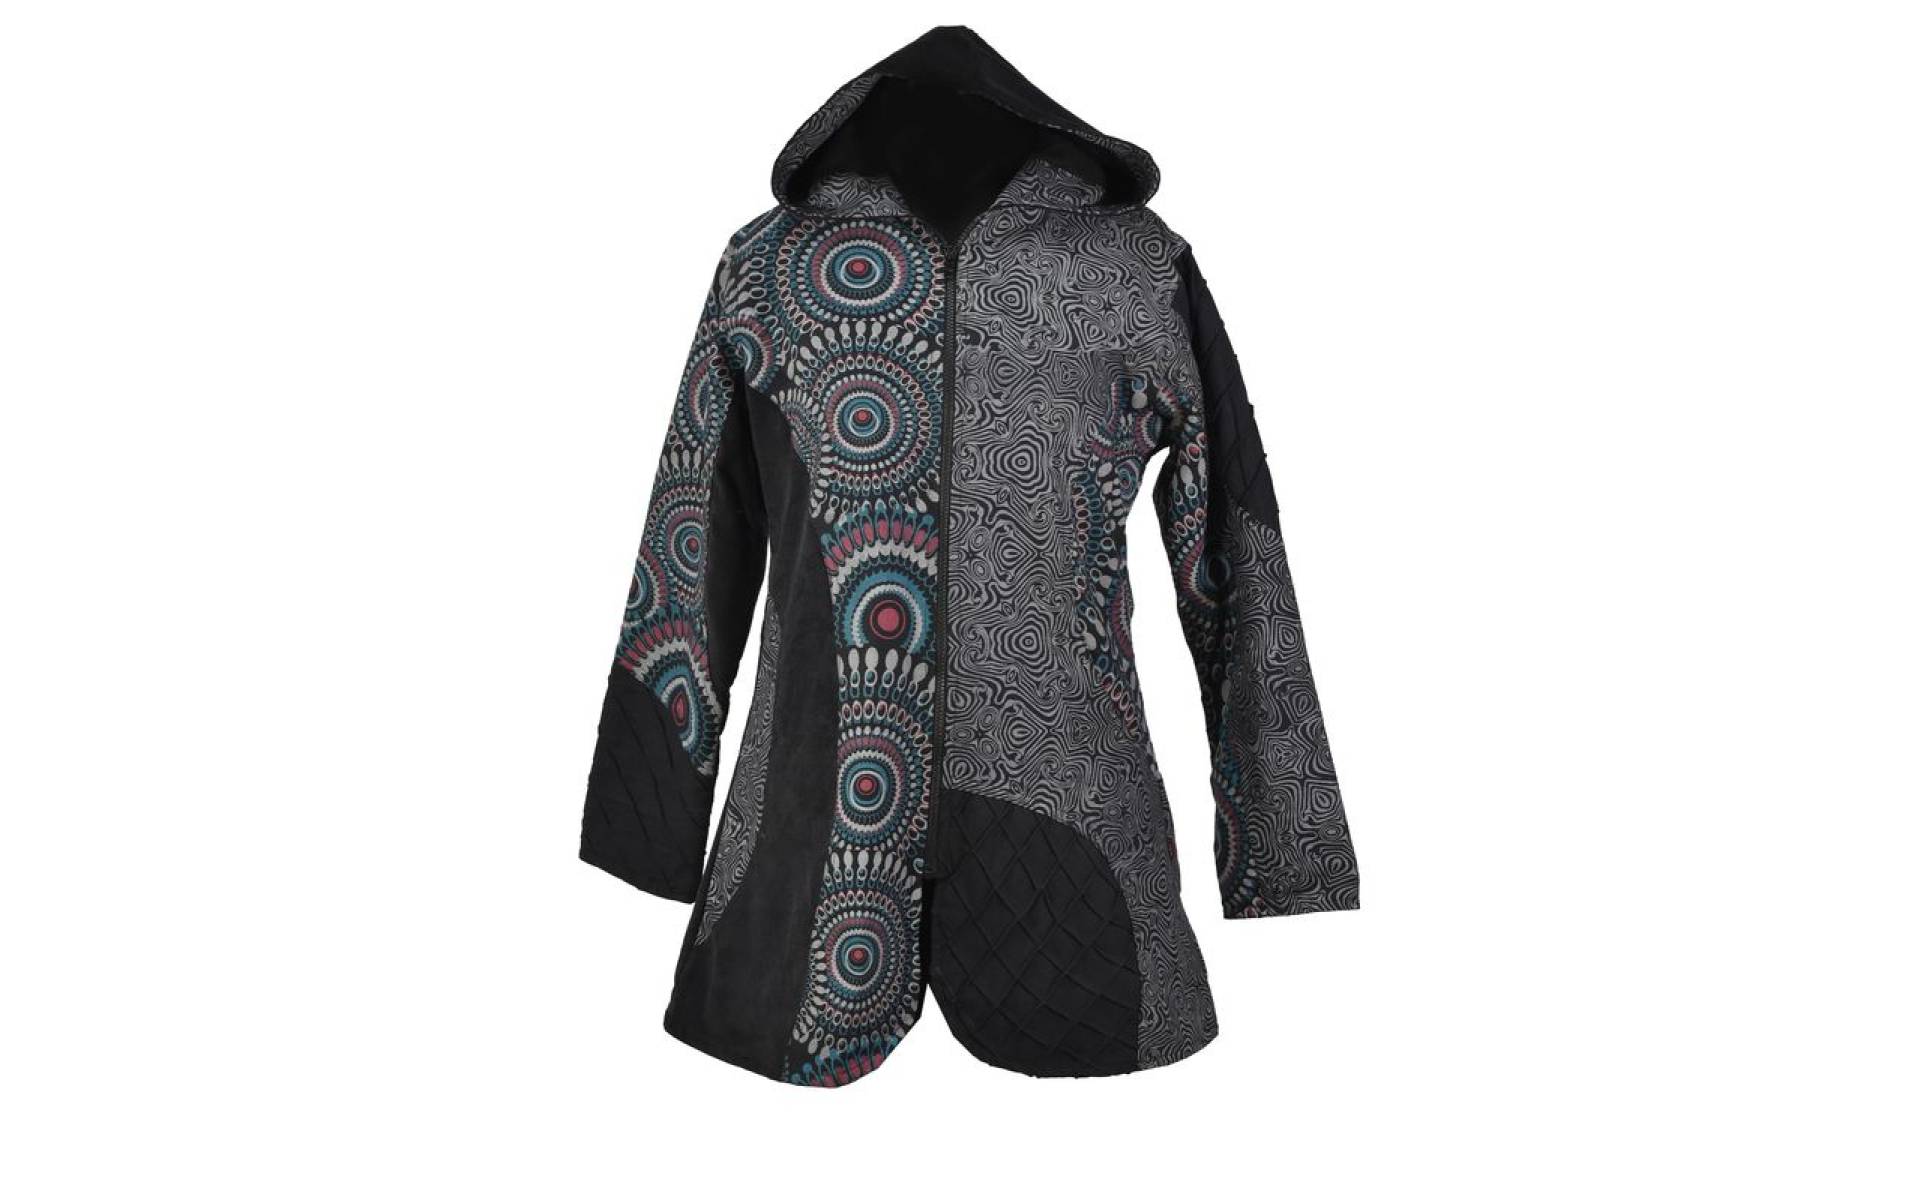 Čierno-sivý kabátik s kapucňou, mandala print, zapínanie na zips a vrecká